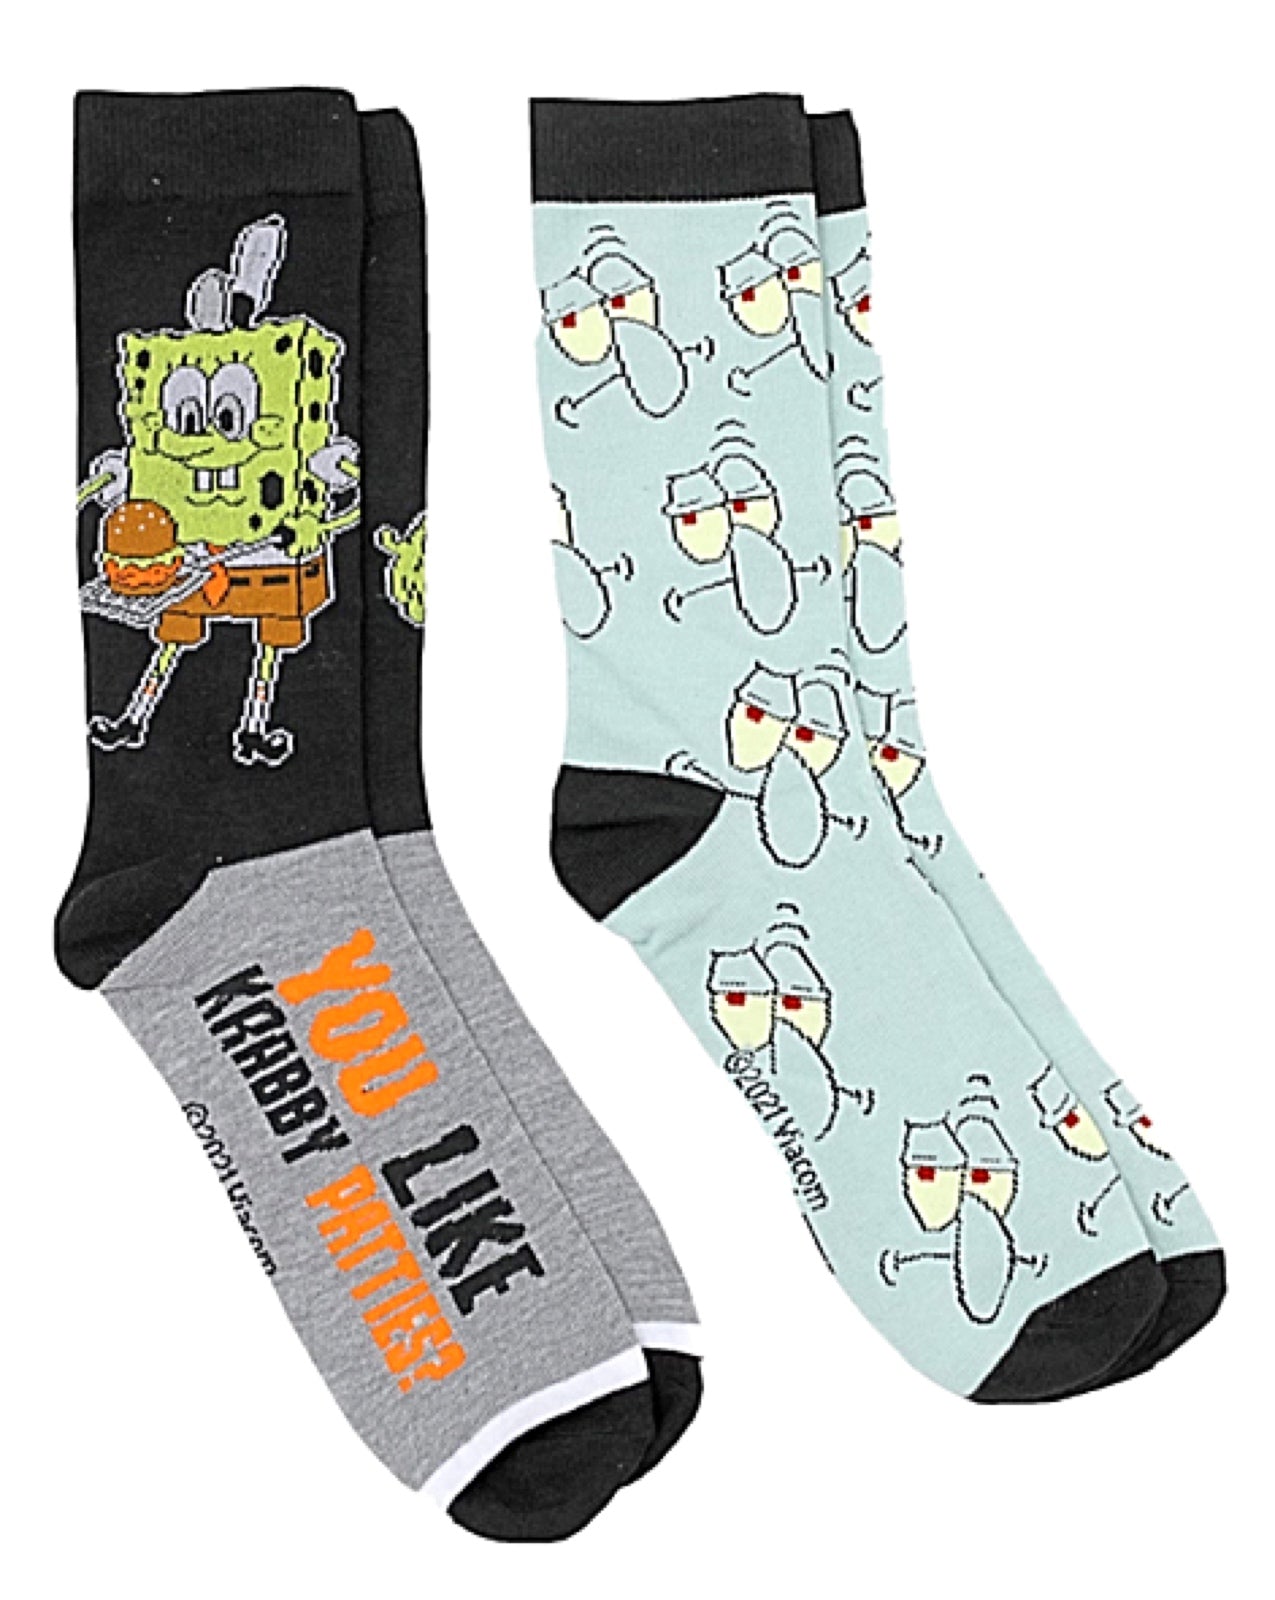 Spongebob Squarepants Mr. Krabs Sub Crew Socks